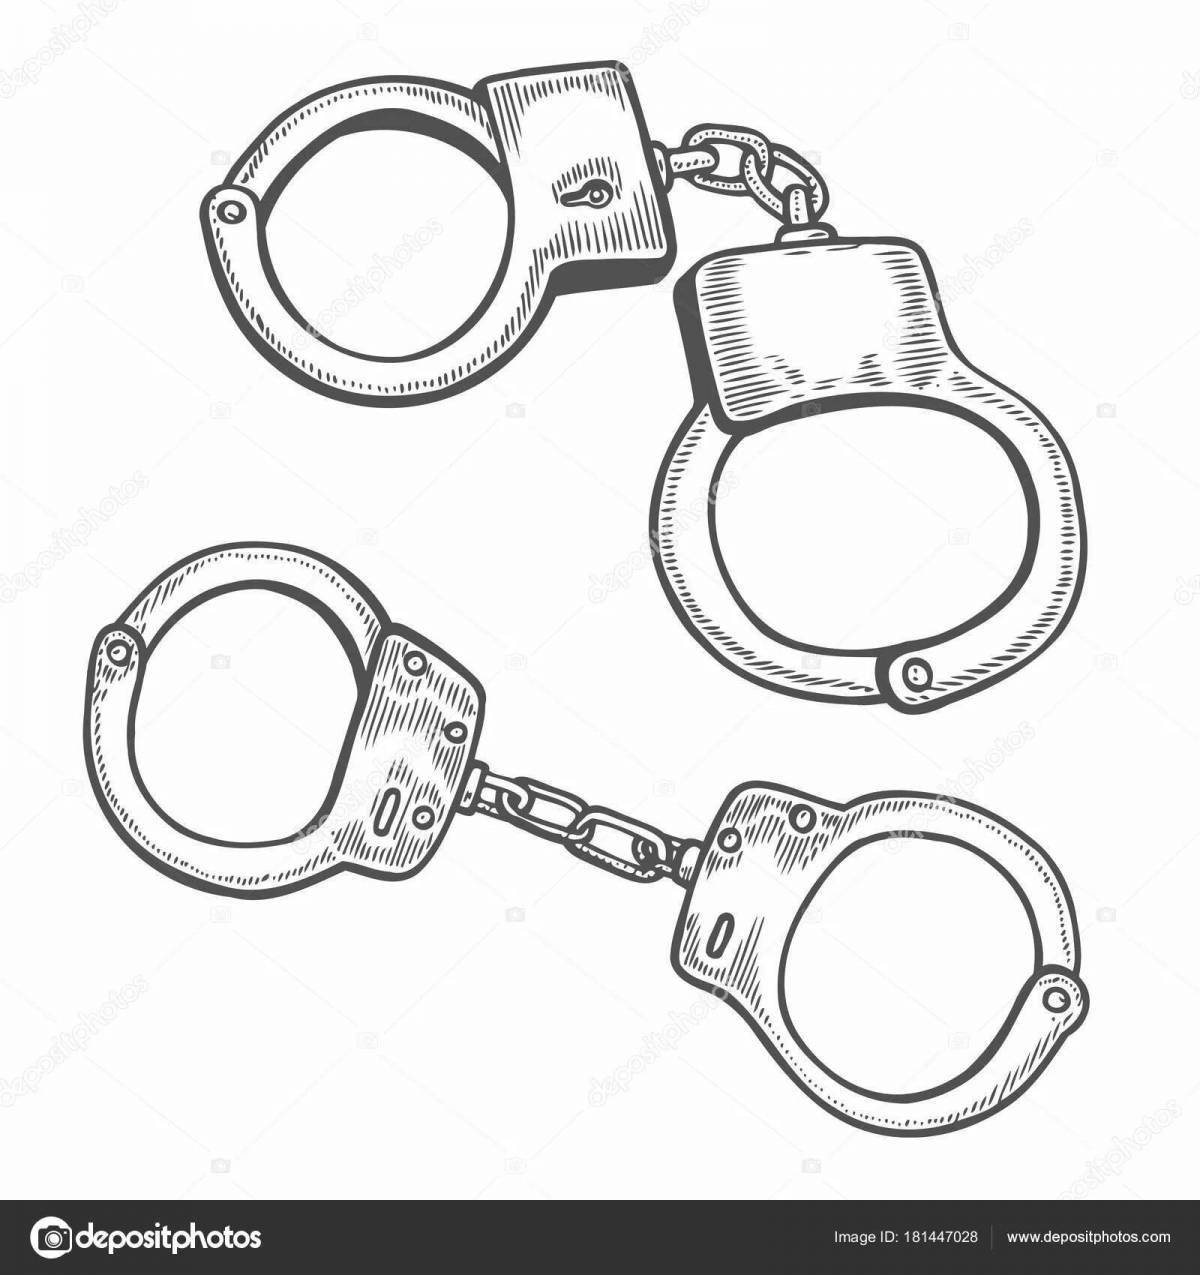 Fine handcuffs coloring page